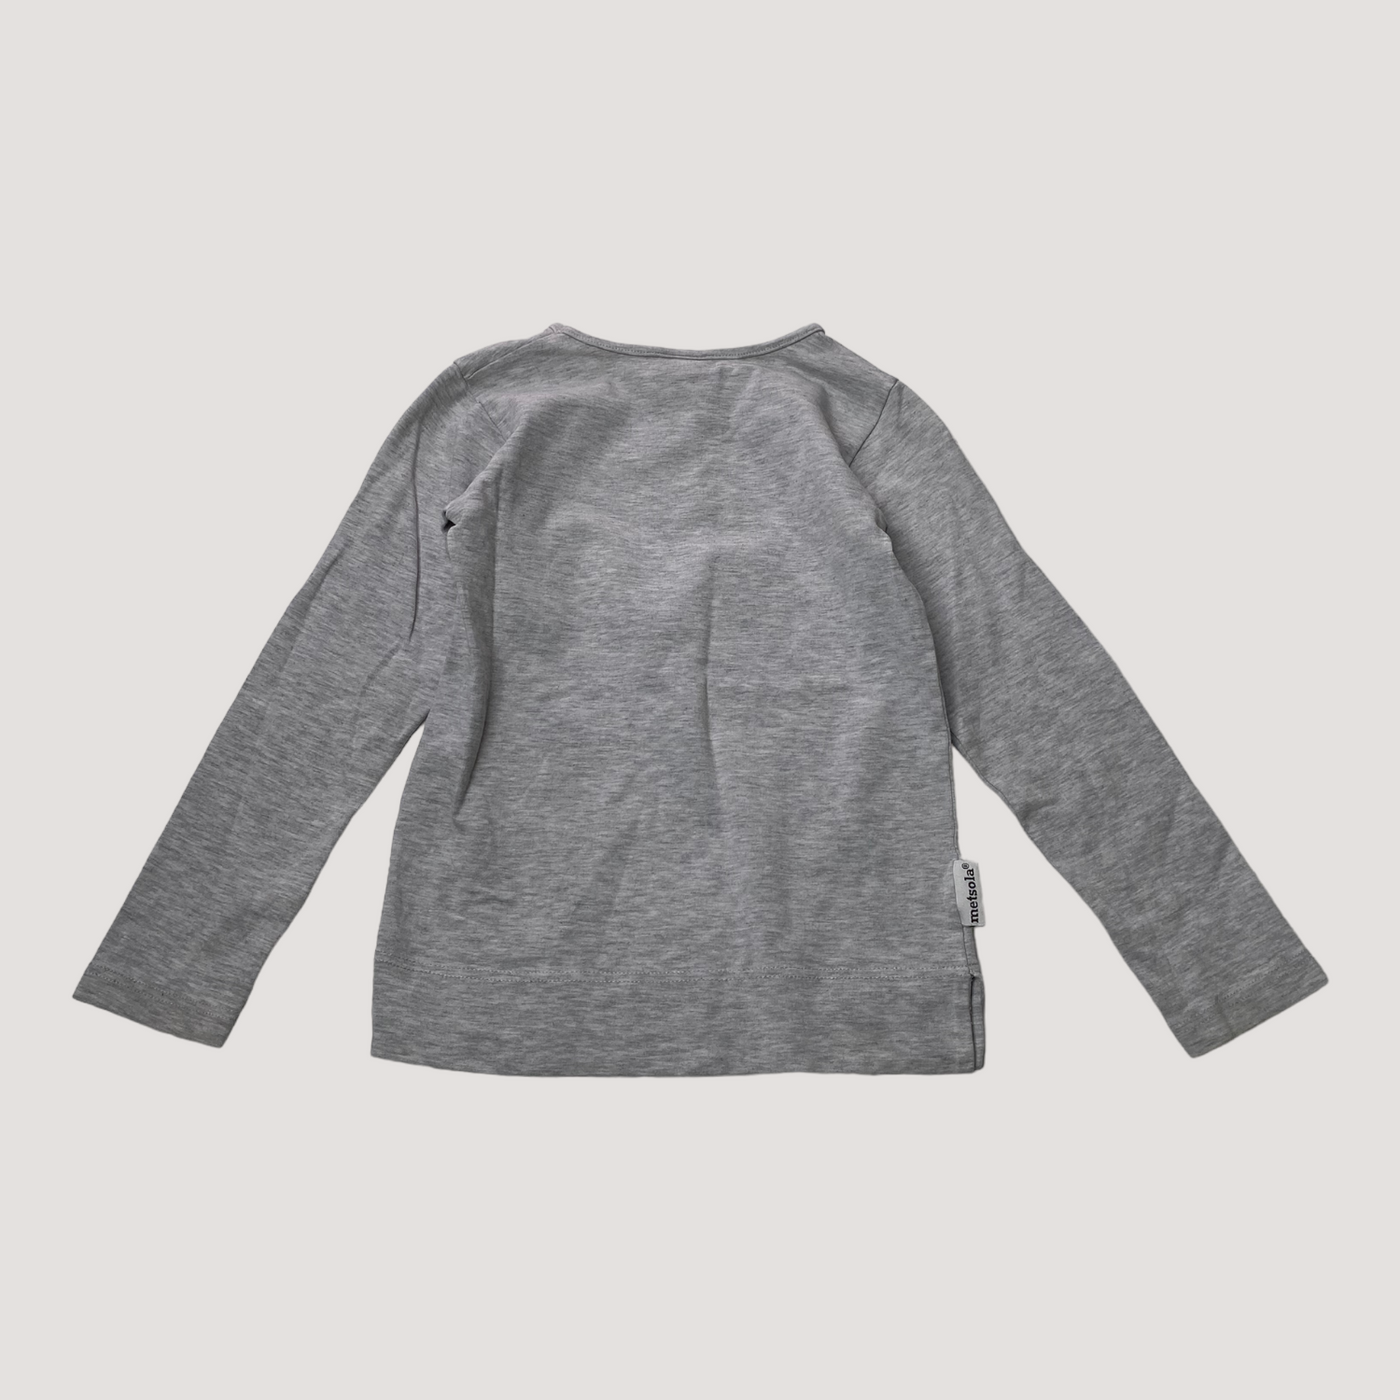 Metsola shirt, platinum grey | 122cm